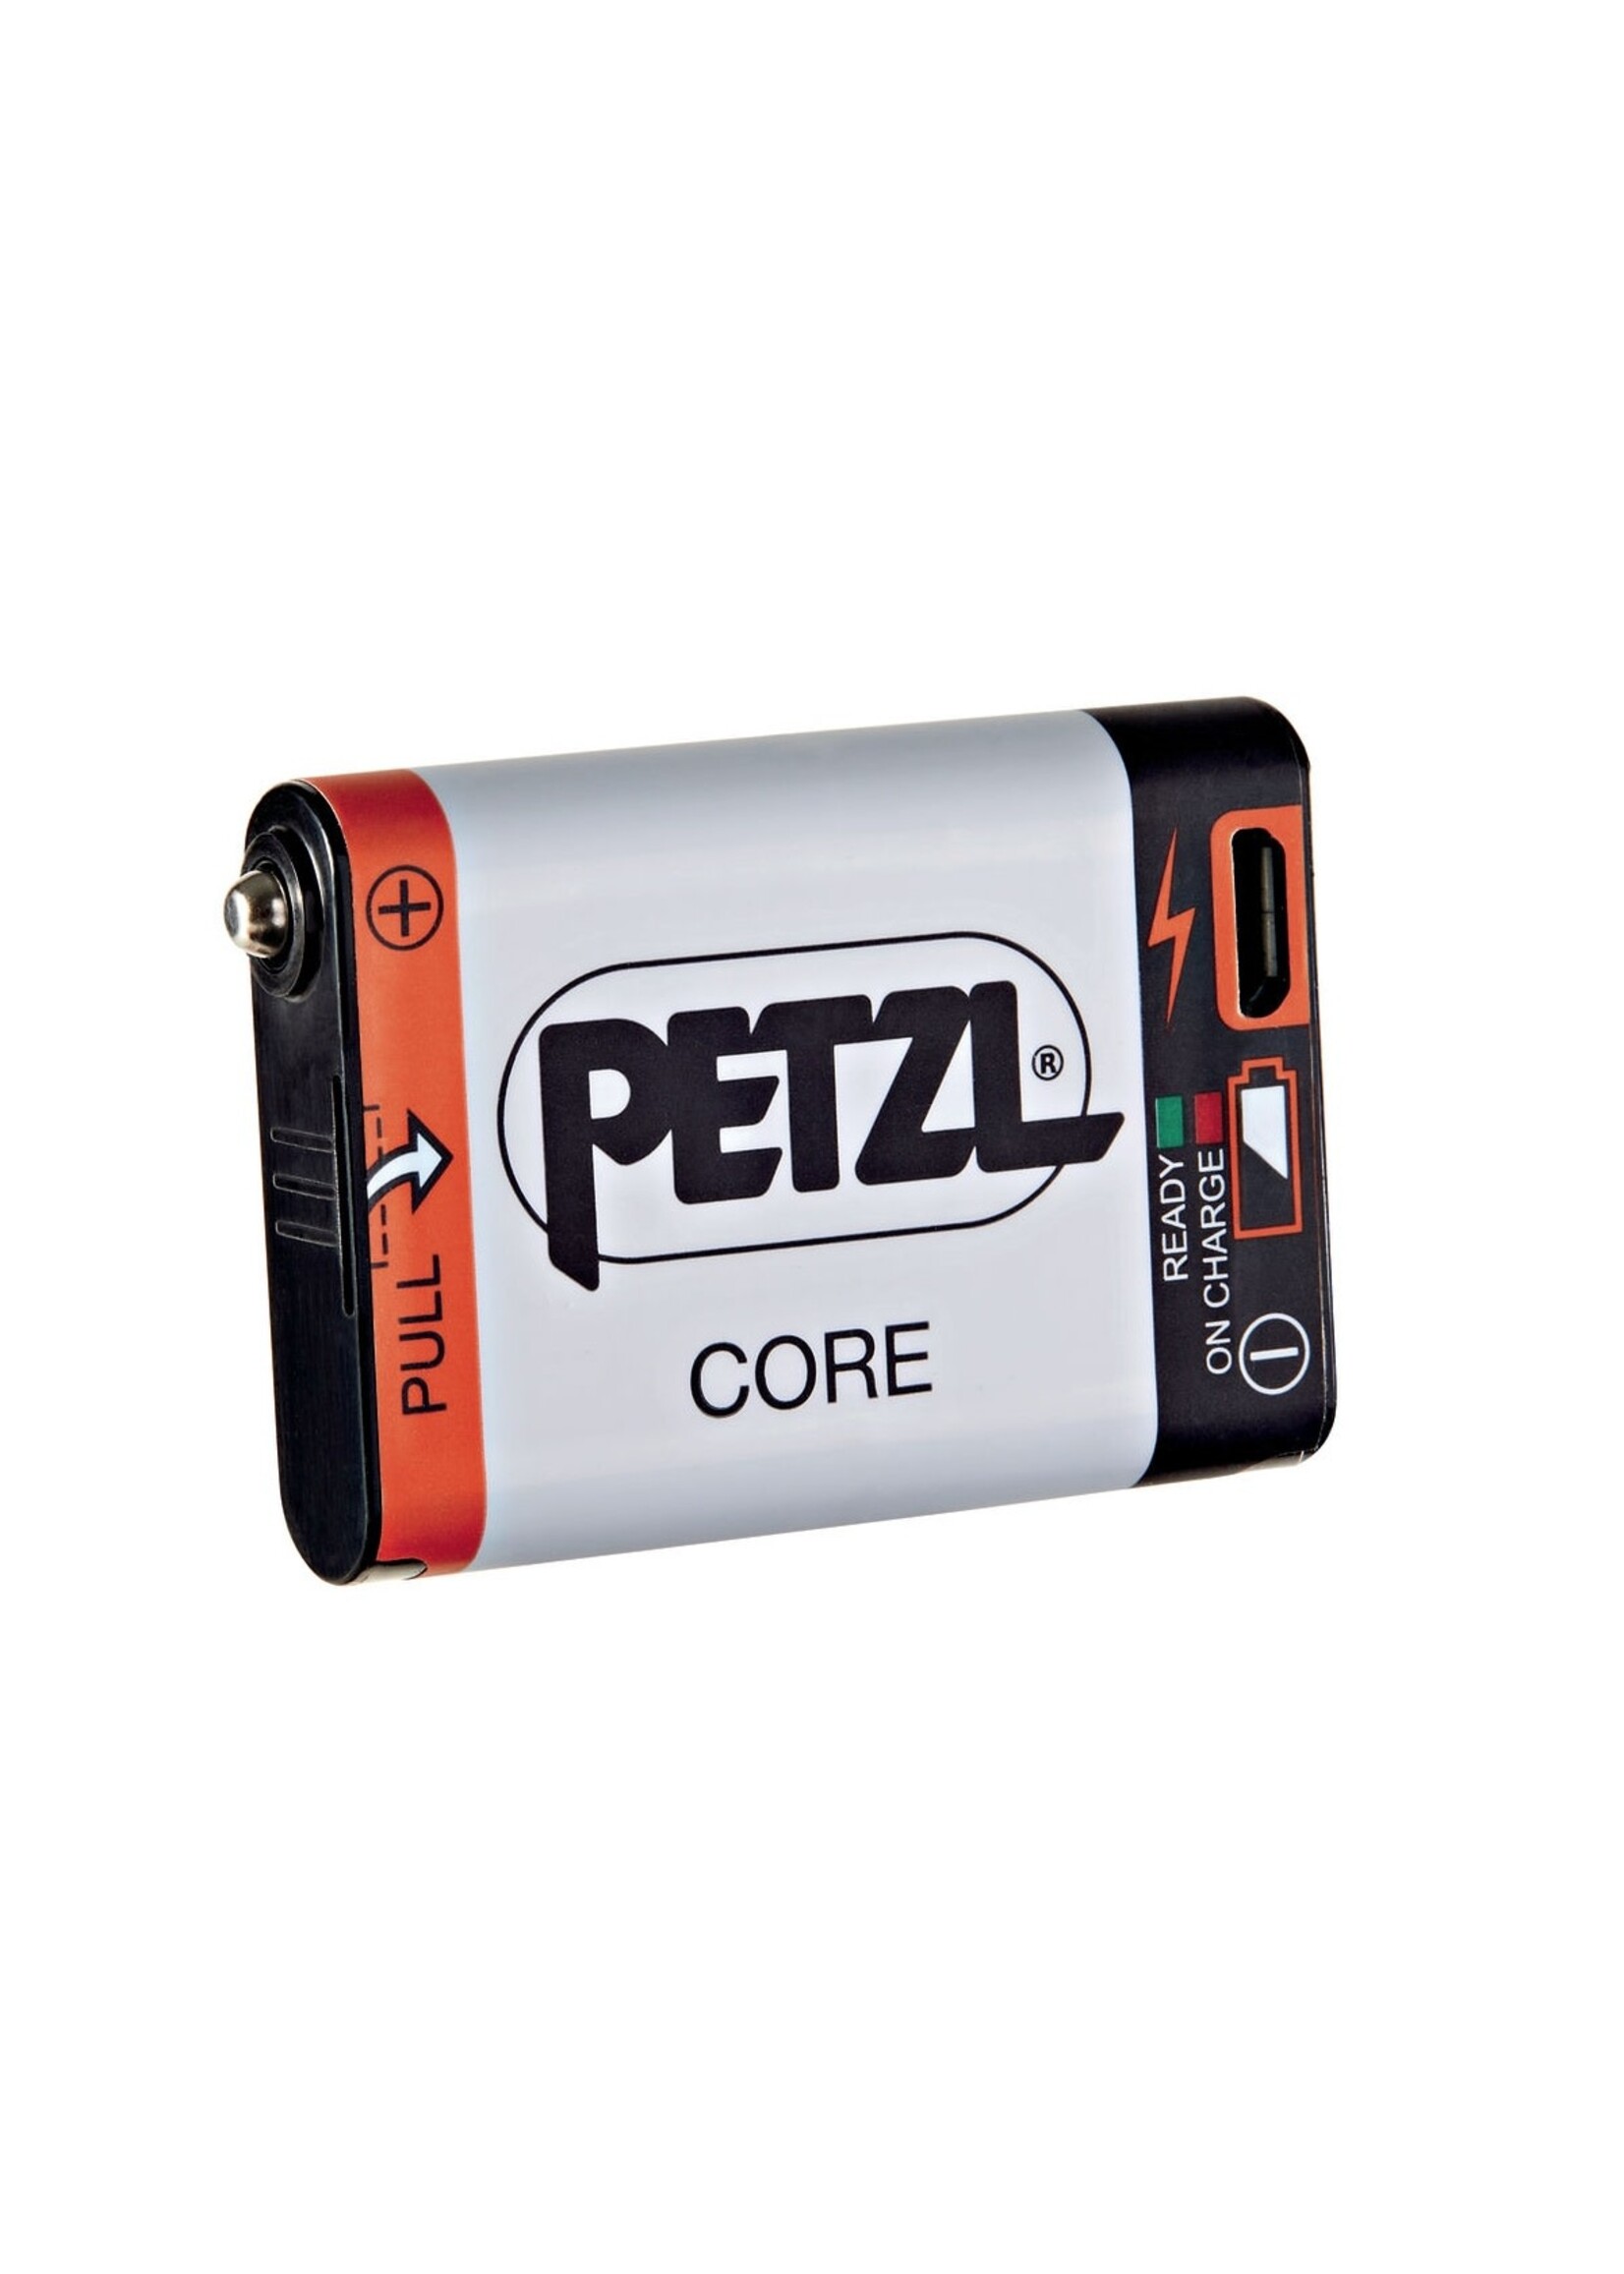 Petzl Petzl Core Headlamp Rechargeable Battery